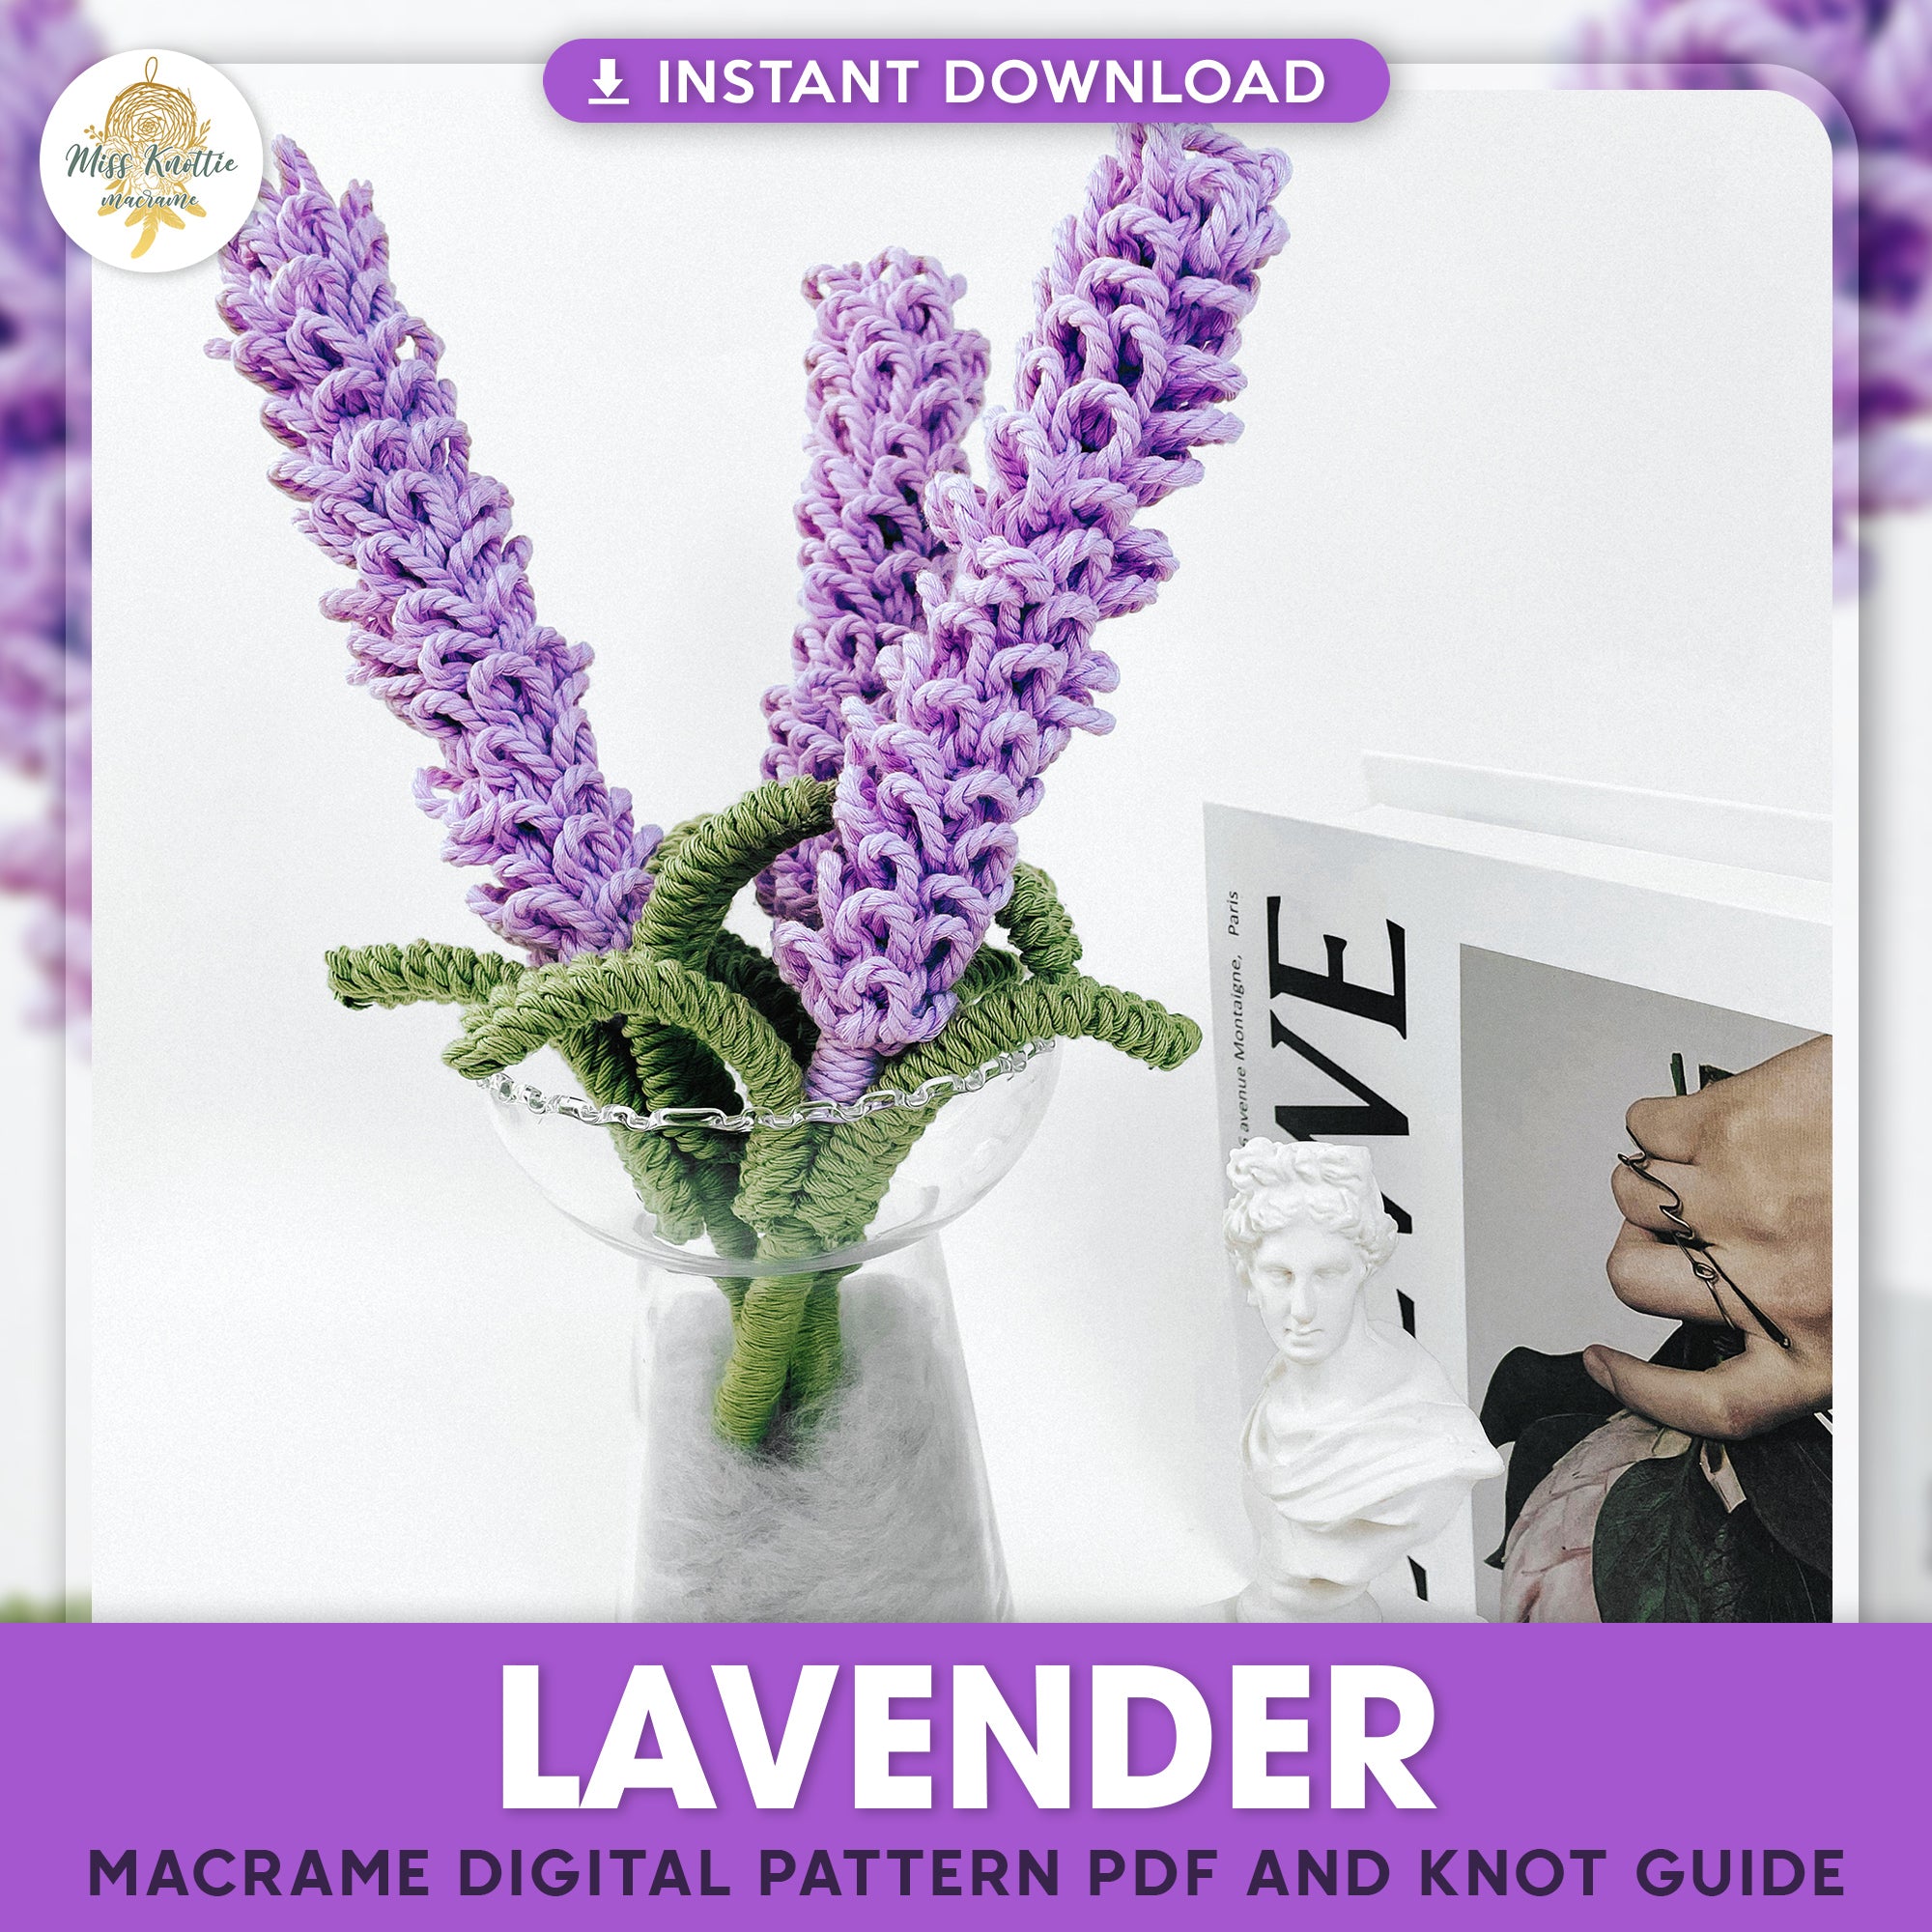 Lavendel muster-Digitale PDF-und Knon anleitung